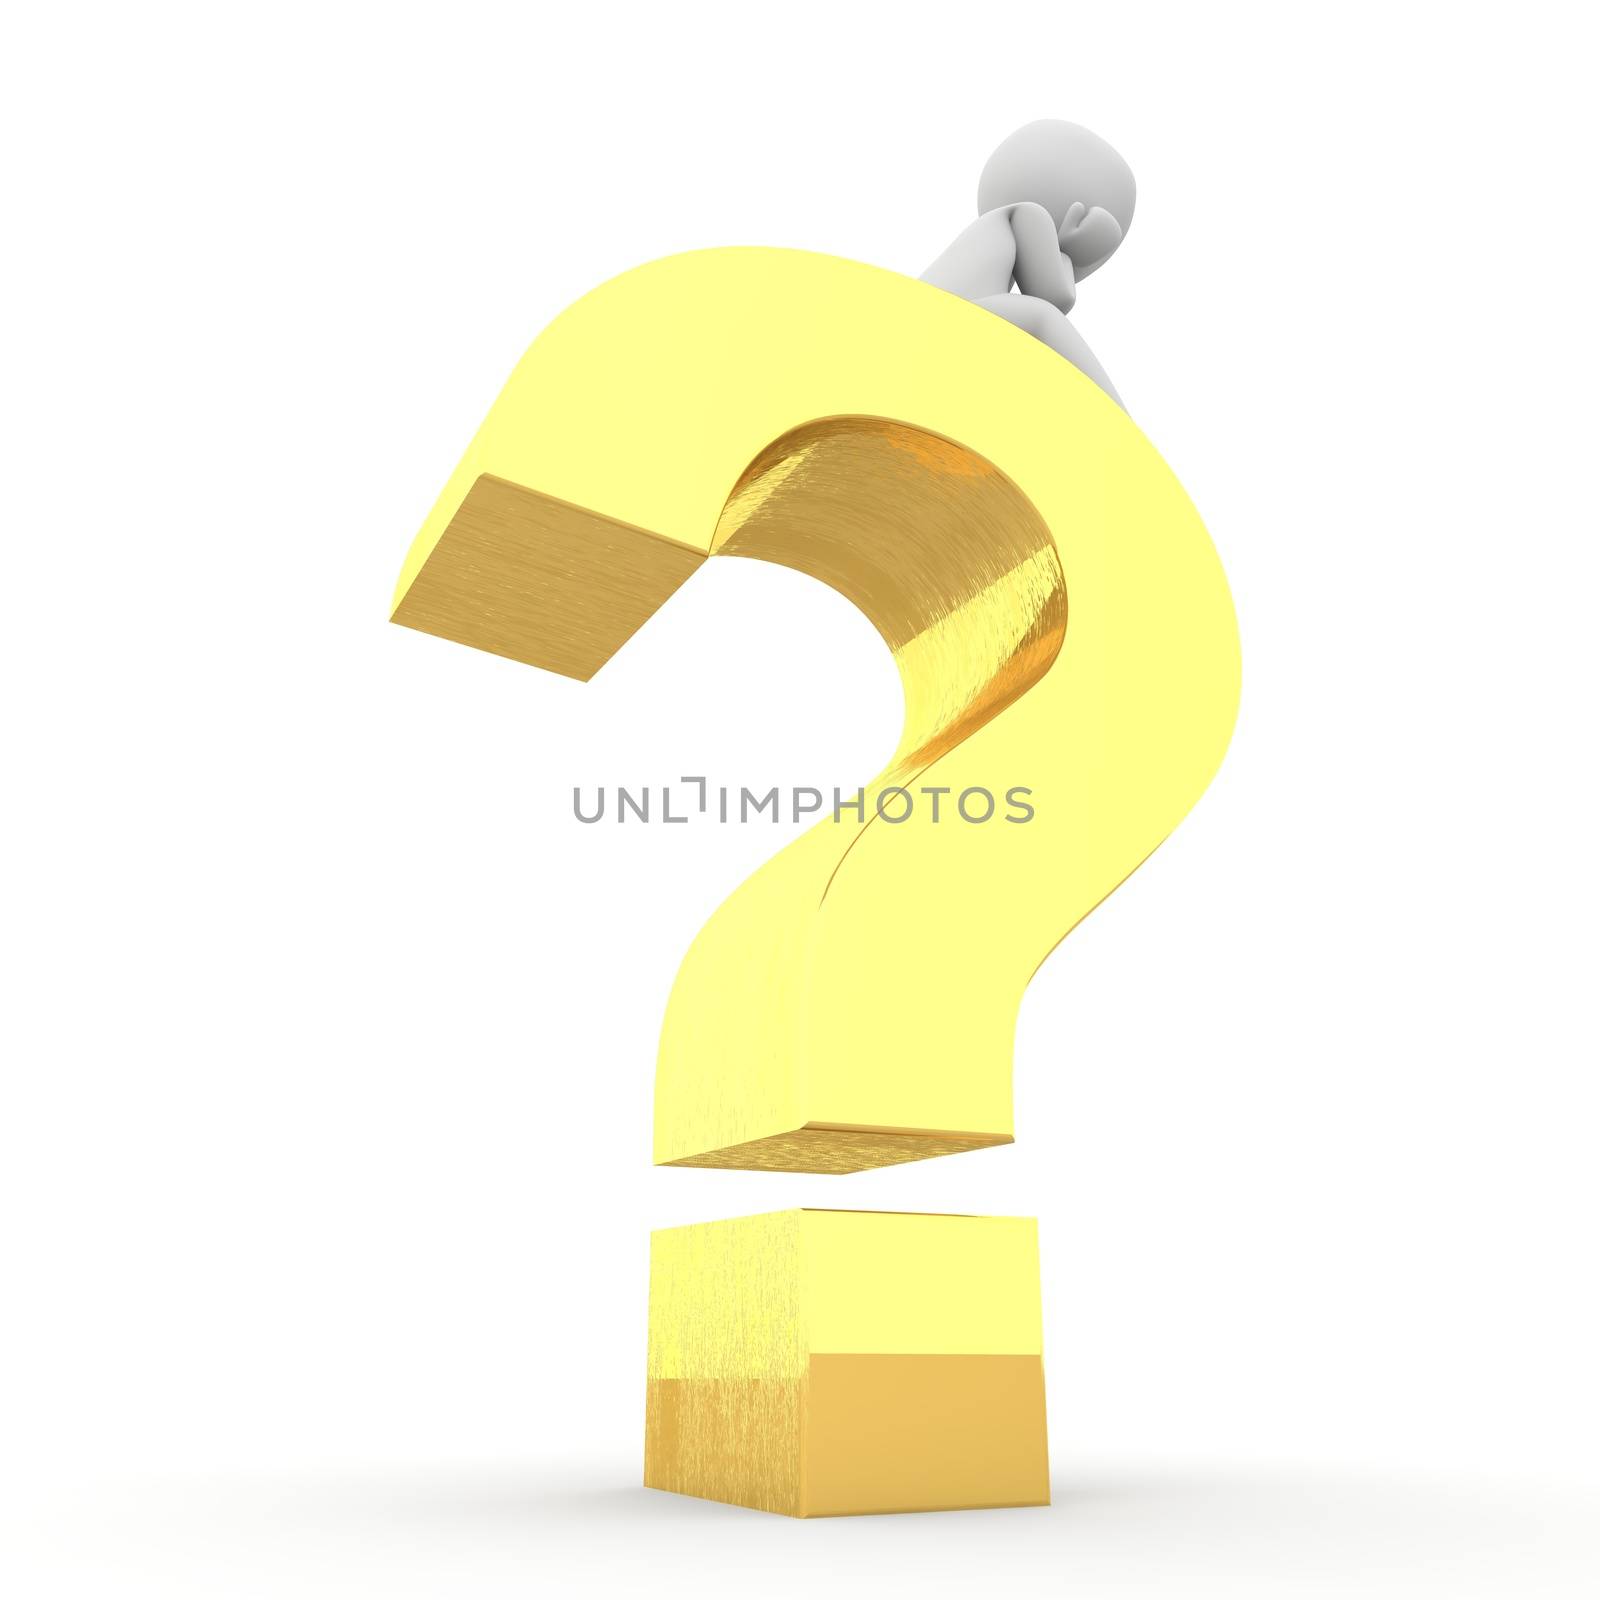 The golden question mark by 3DAgentur